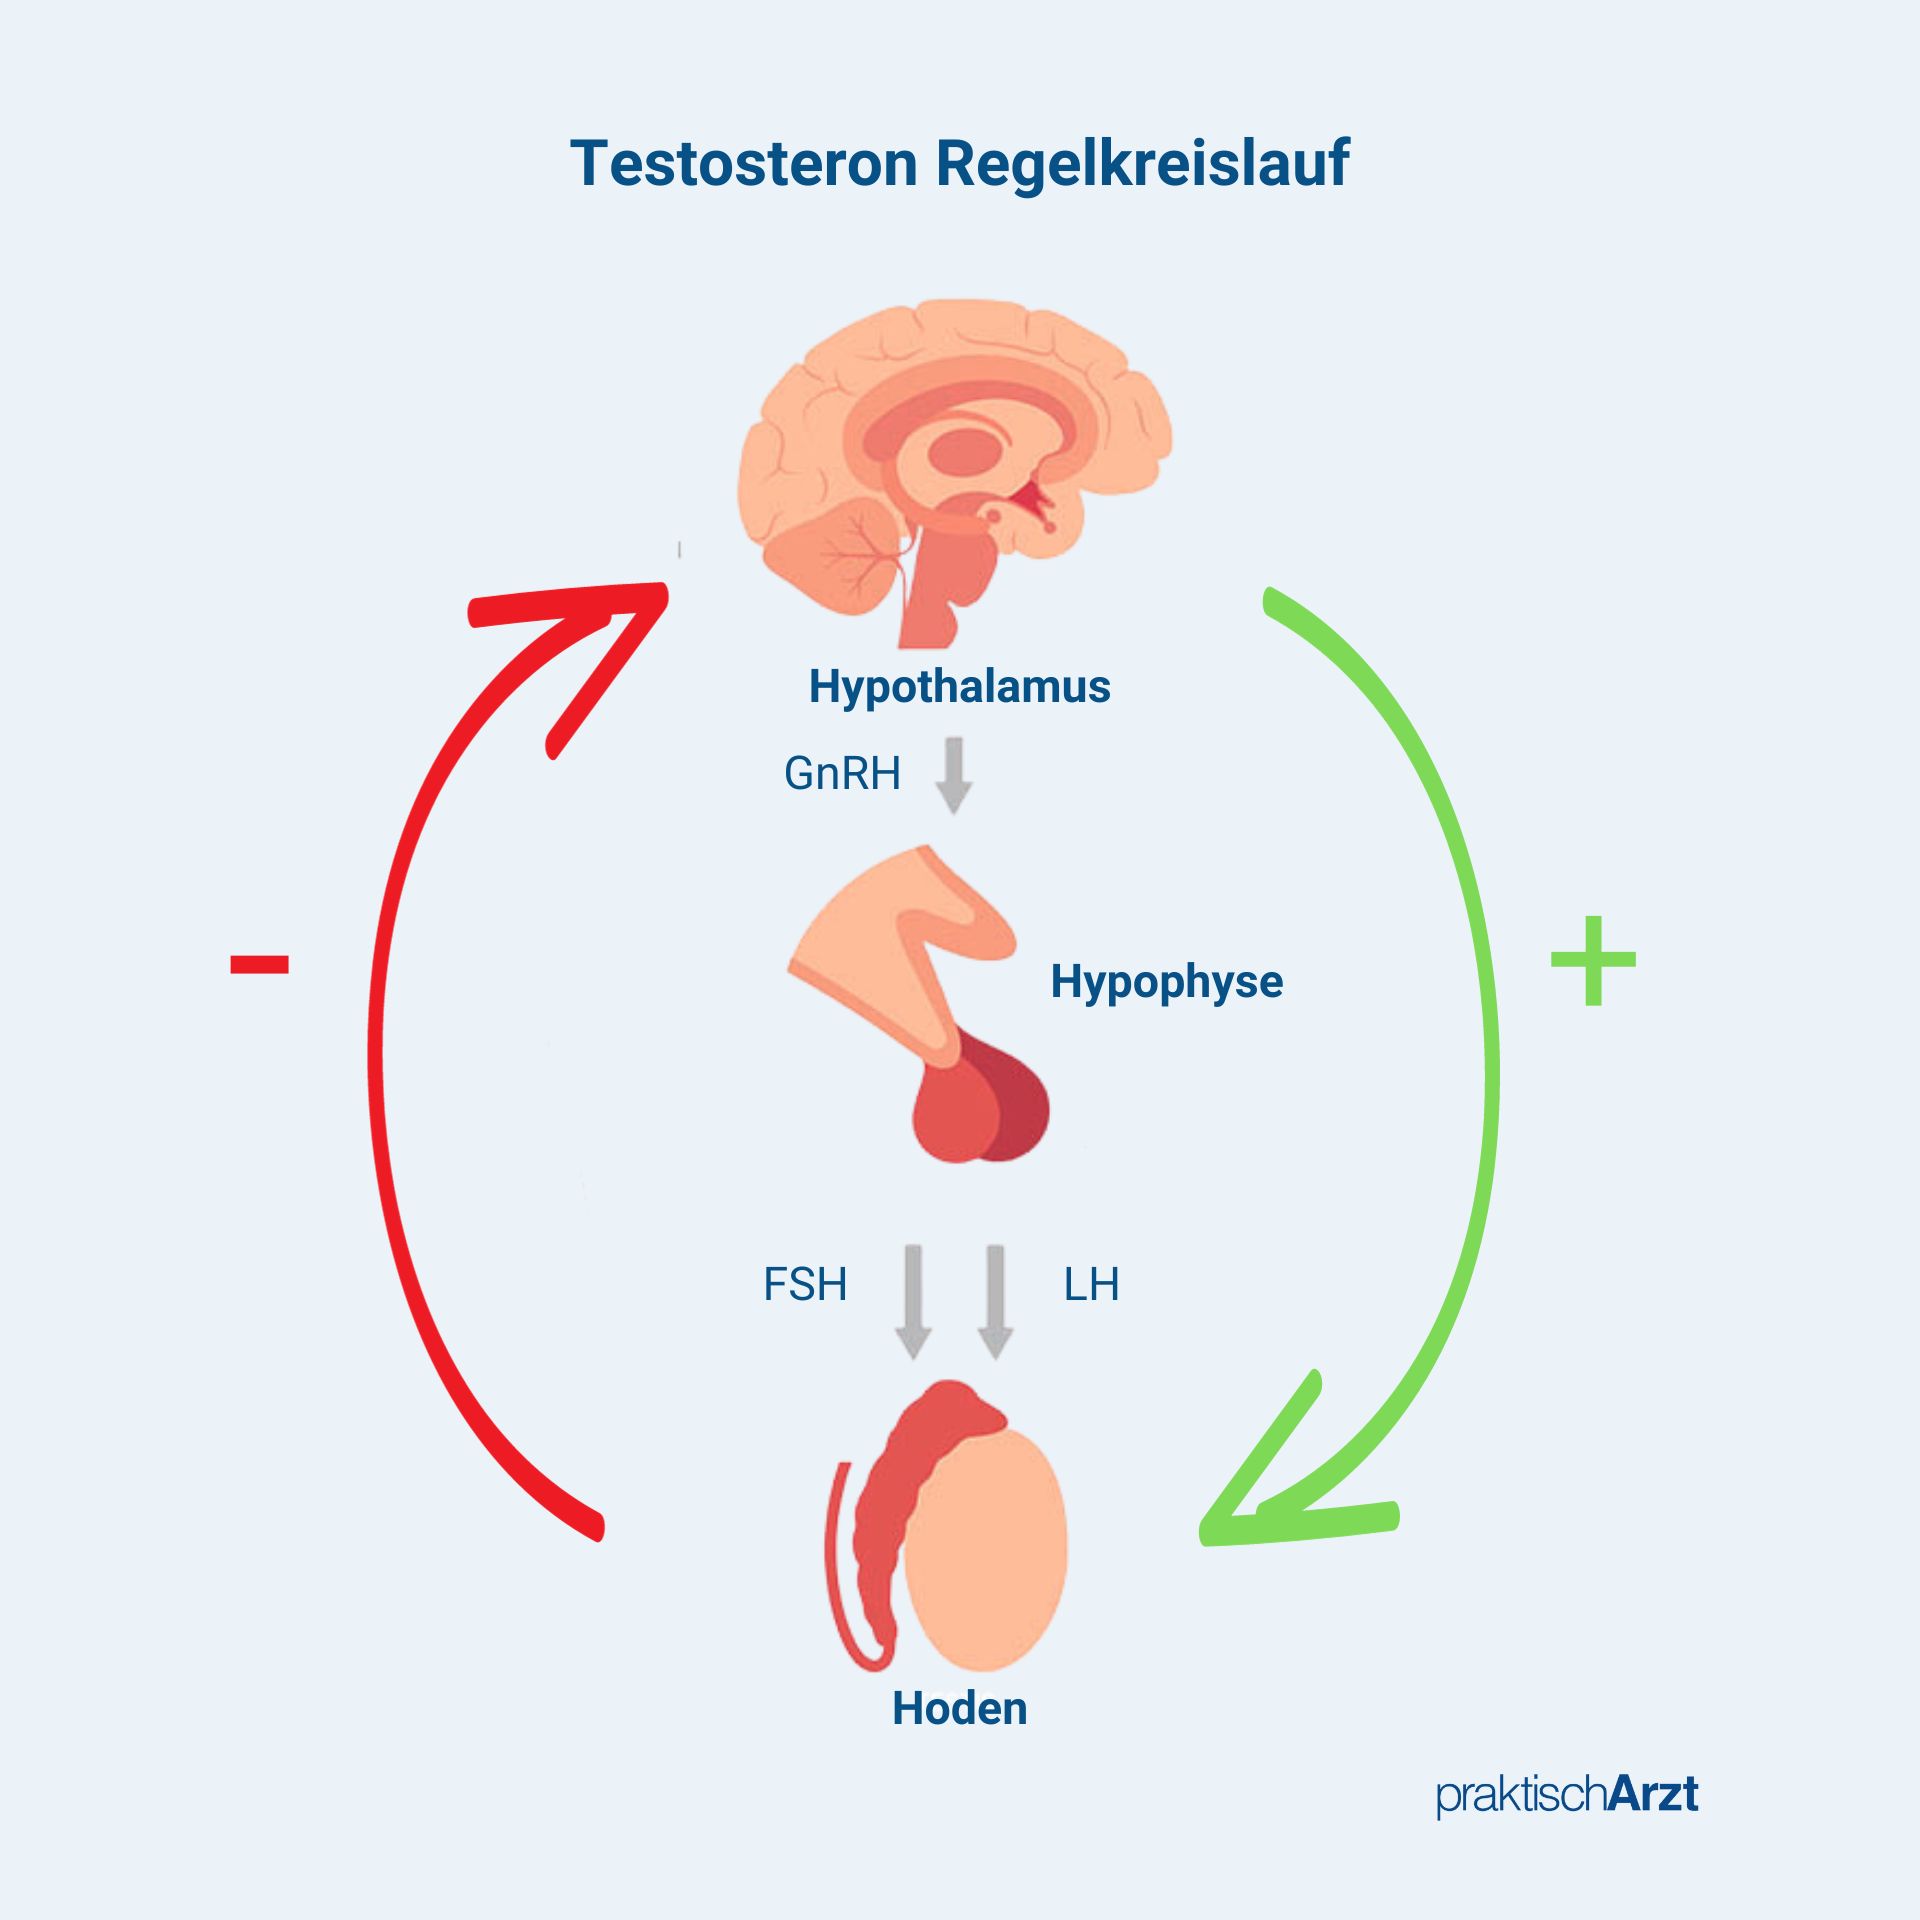 Testosteron Regelkreislauf